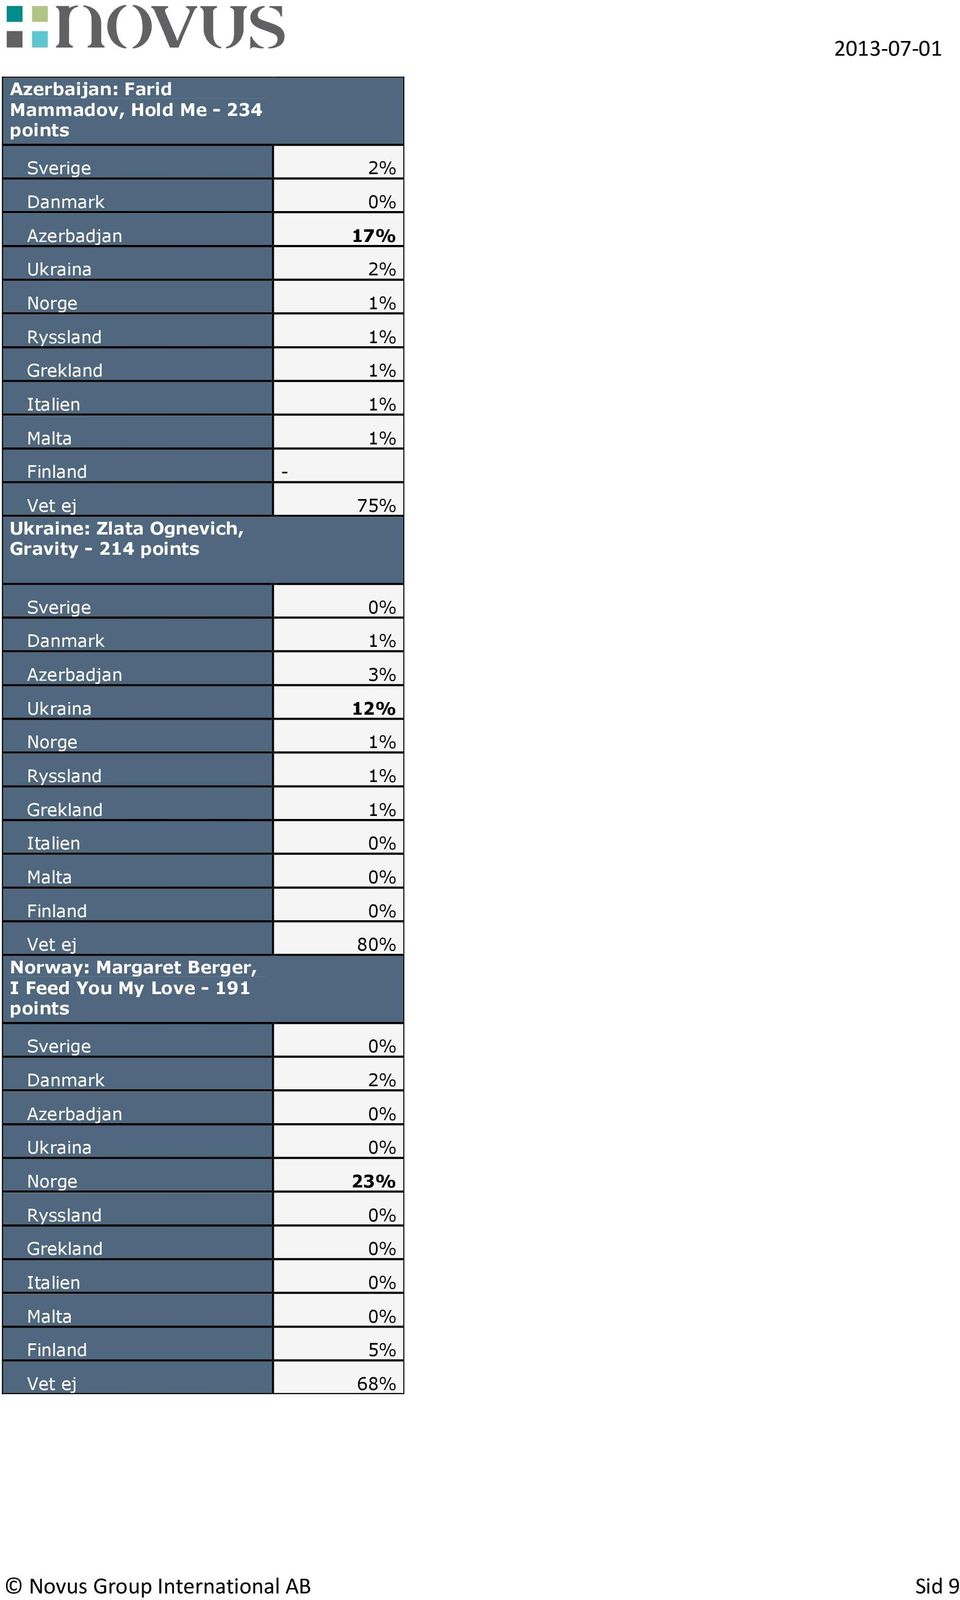 Ryssland 1% Grekland 1% Italien 0% Malta 0% Finland 0% Vet ej 80% Norway: Margaret Berger, I Feed You My Love - 191 points Danmark